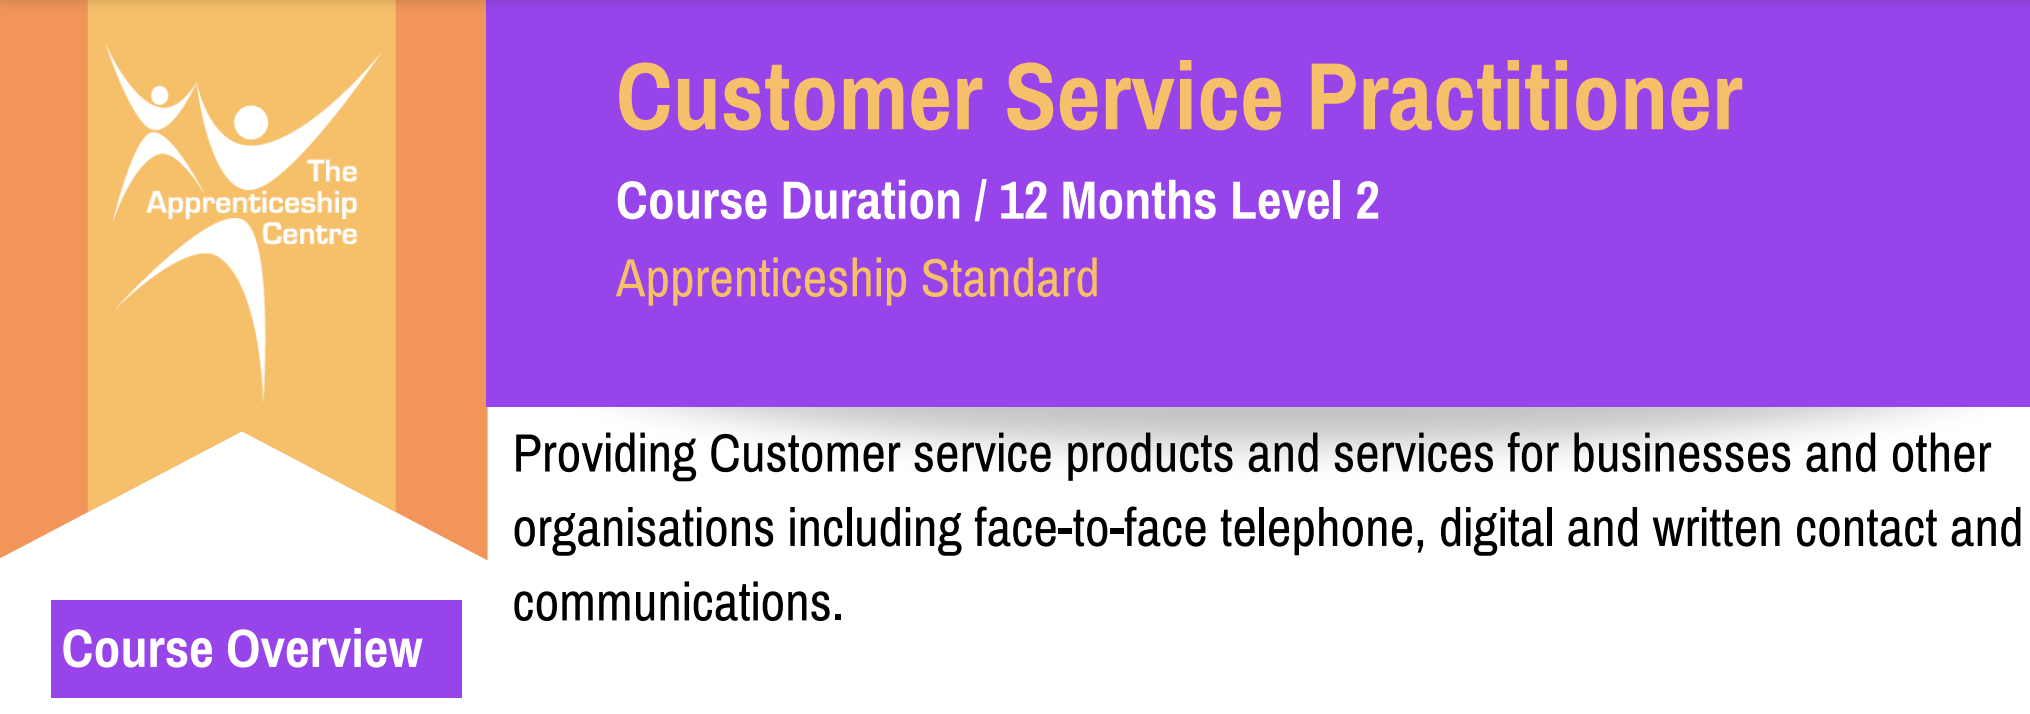 Customer Service Practitioner Level 2